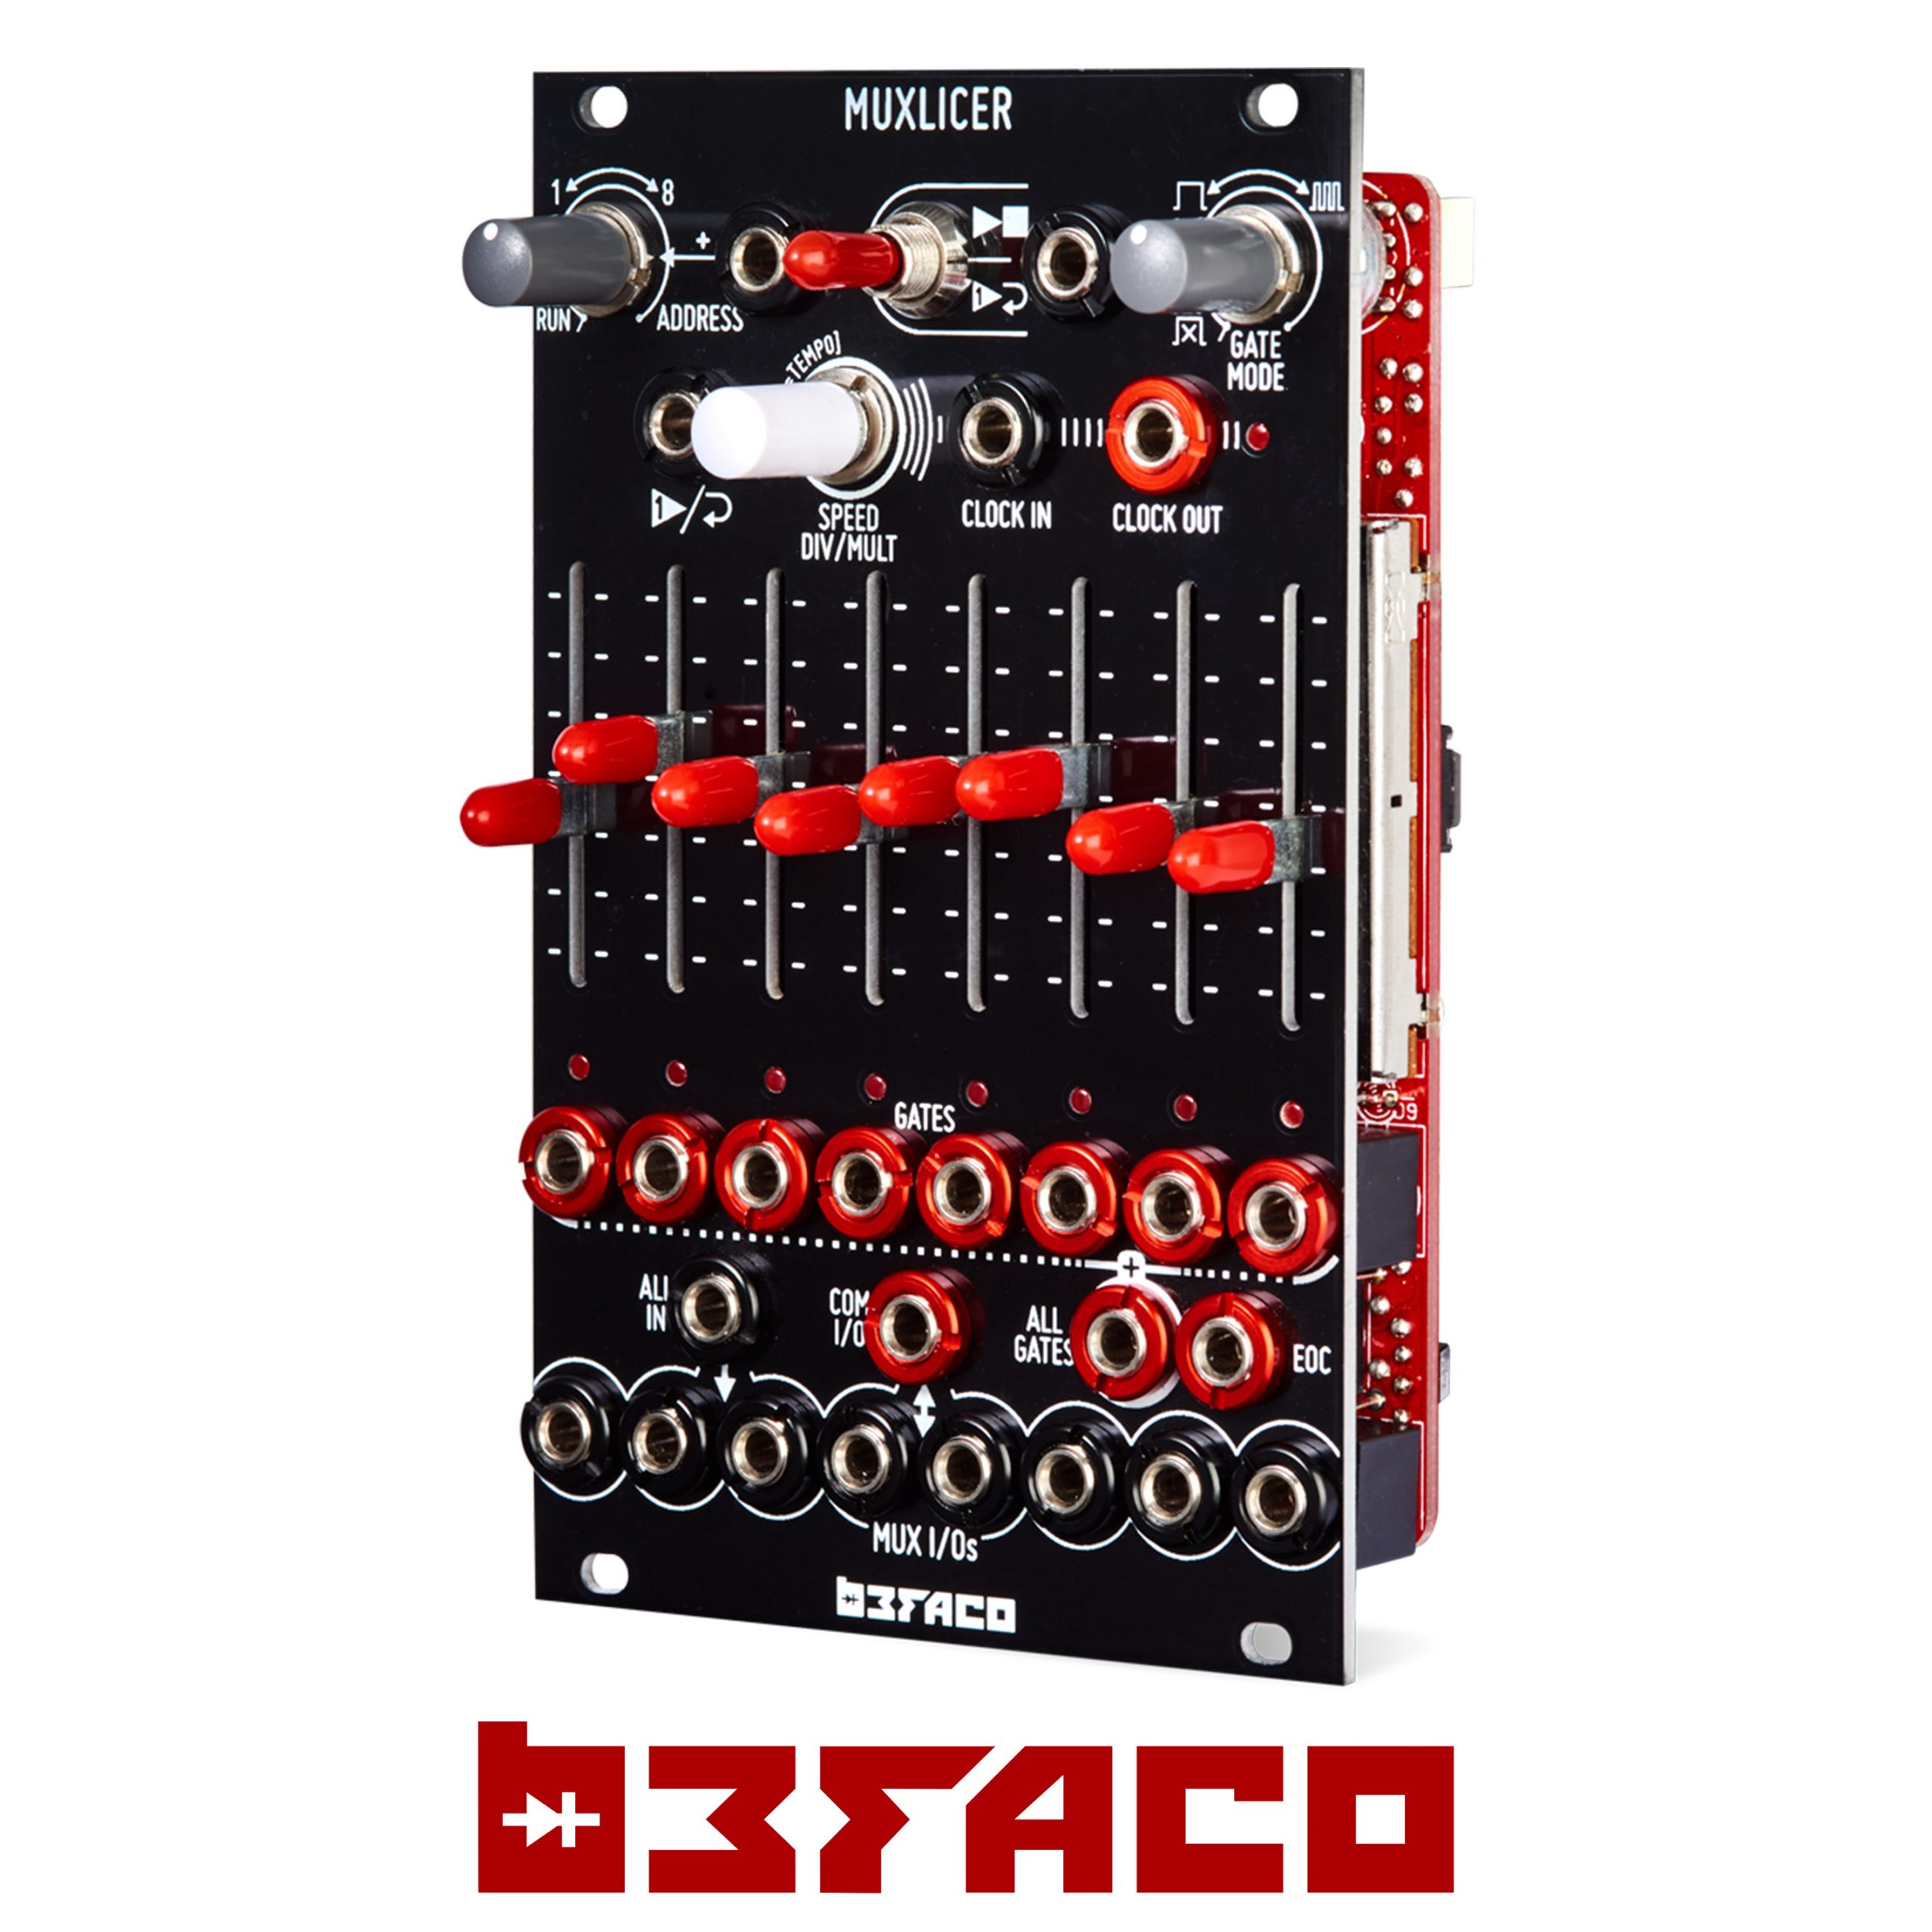 Befaco 'Muxlicer' – Full DIY Kit – Thonk – DIY Synthesizer Kits  Components